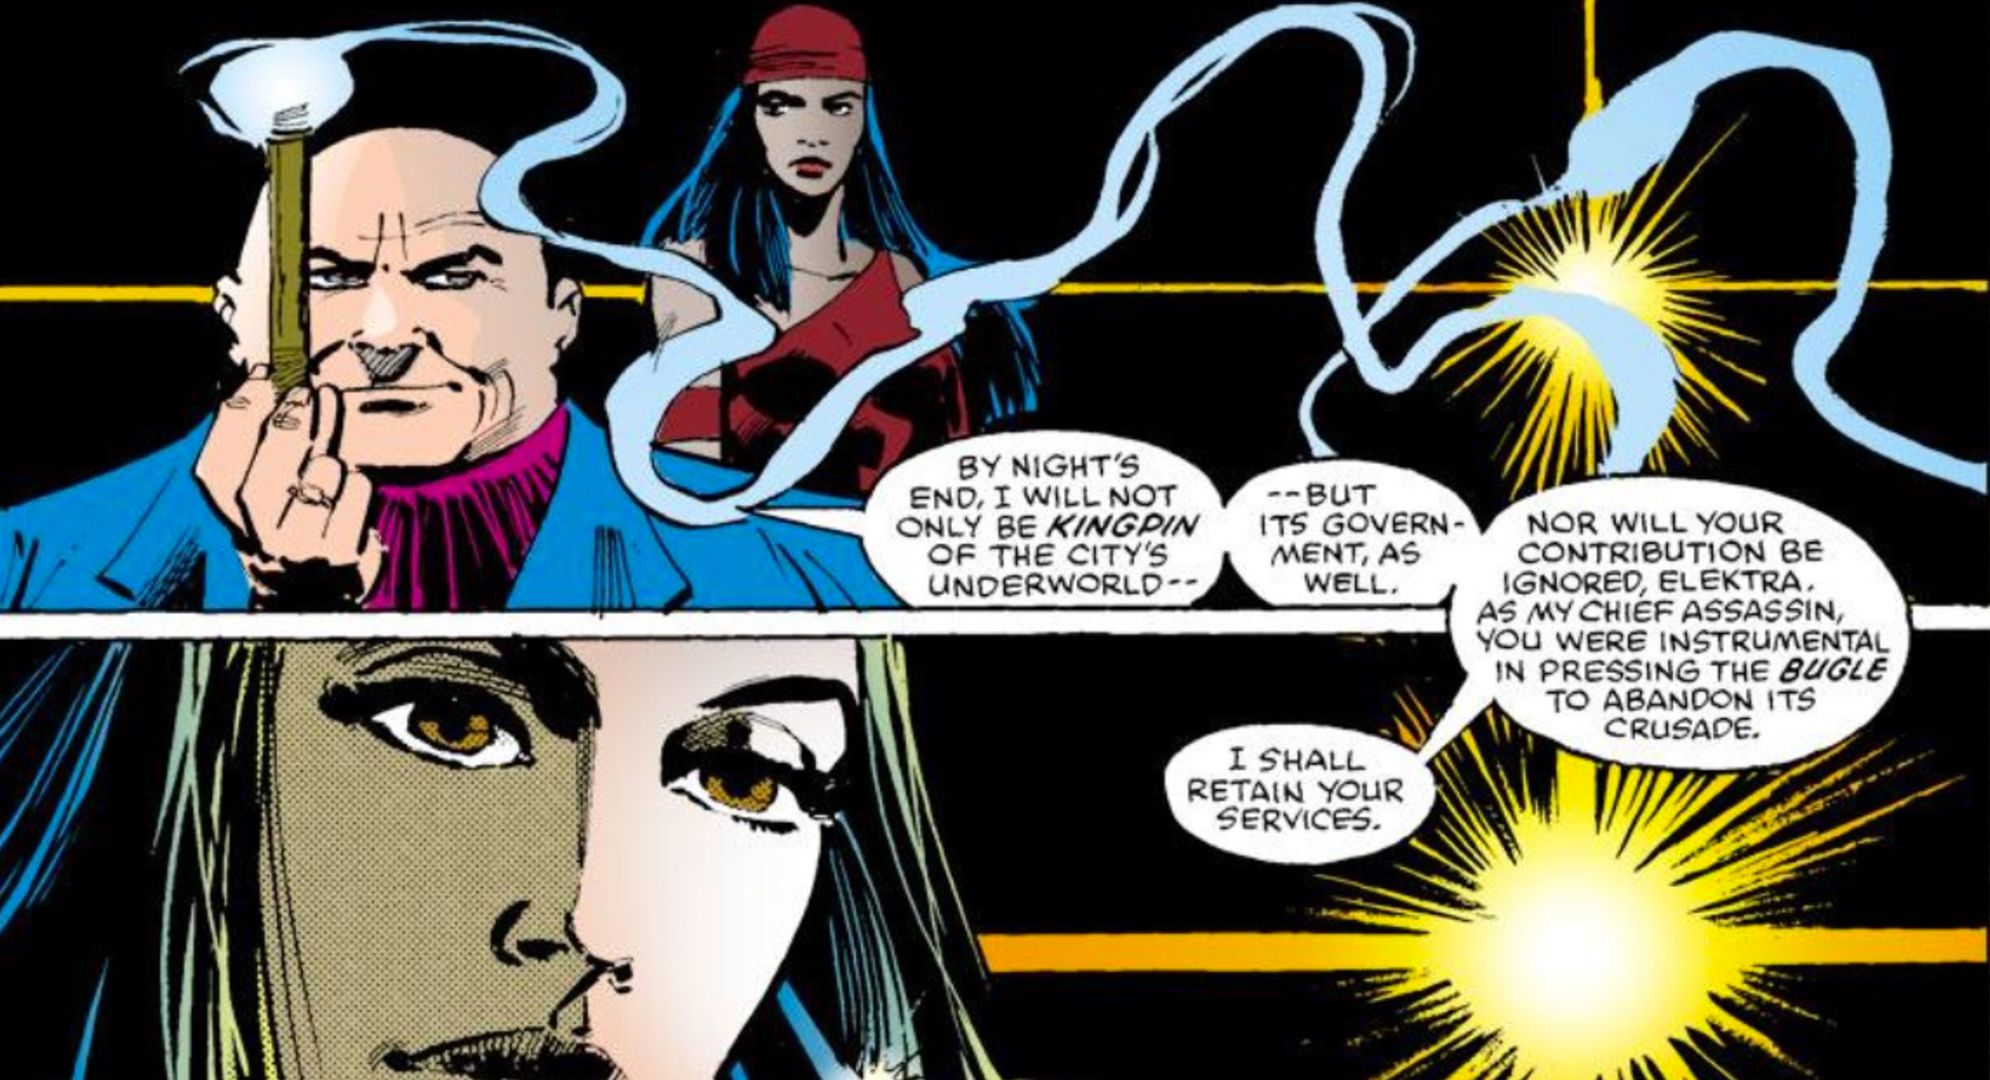 Elektra works for Kingpin in Marvel Comics.